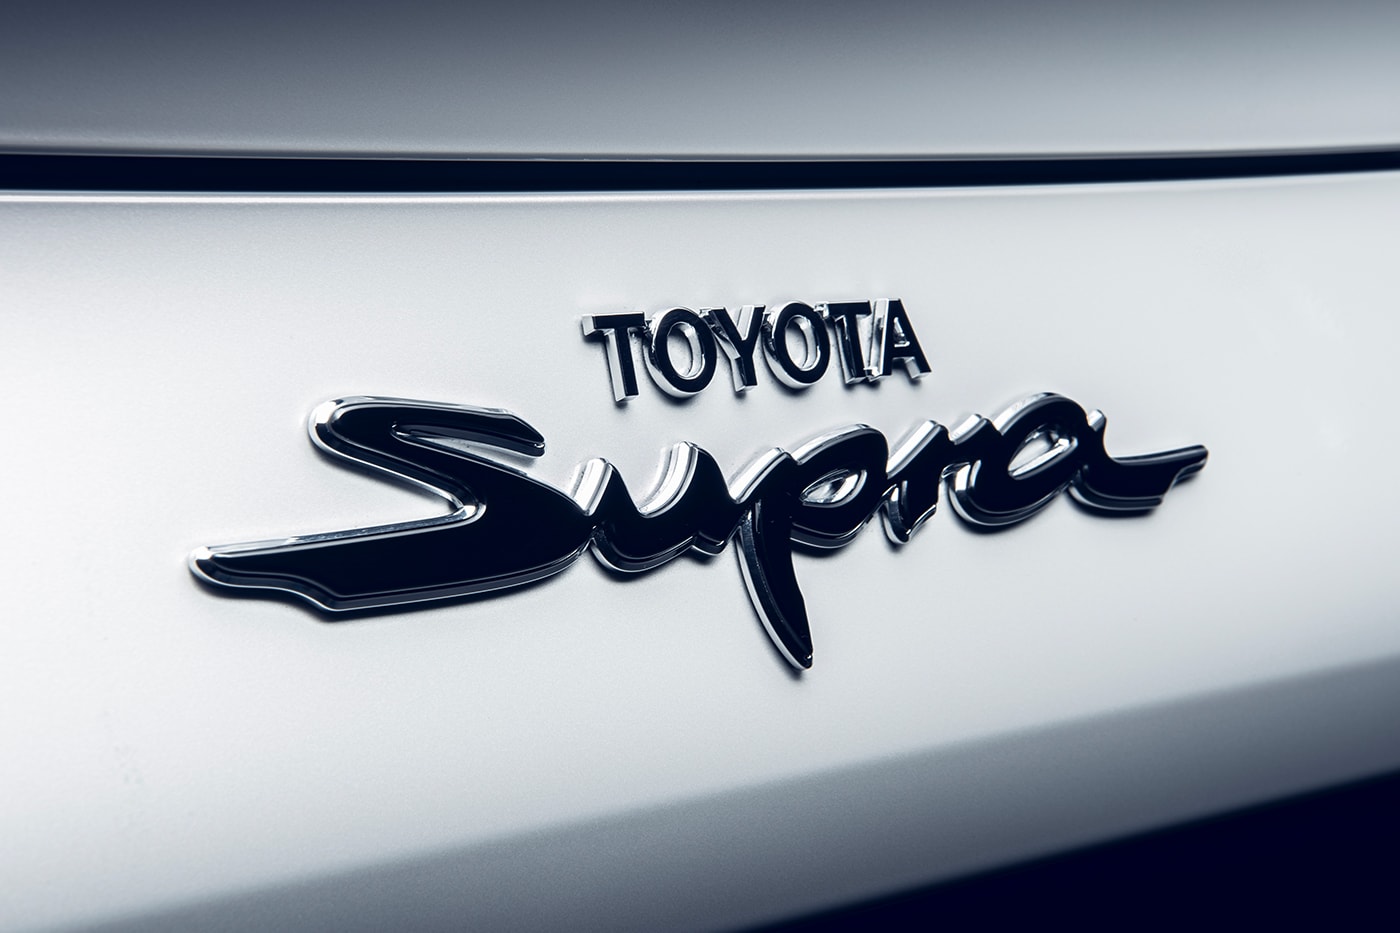 Toyota Turbo 2.0-L "Fuji Speedway" GR Supra Info Supra BMW European Market Japan sports cars horsepower 